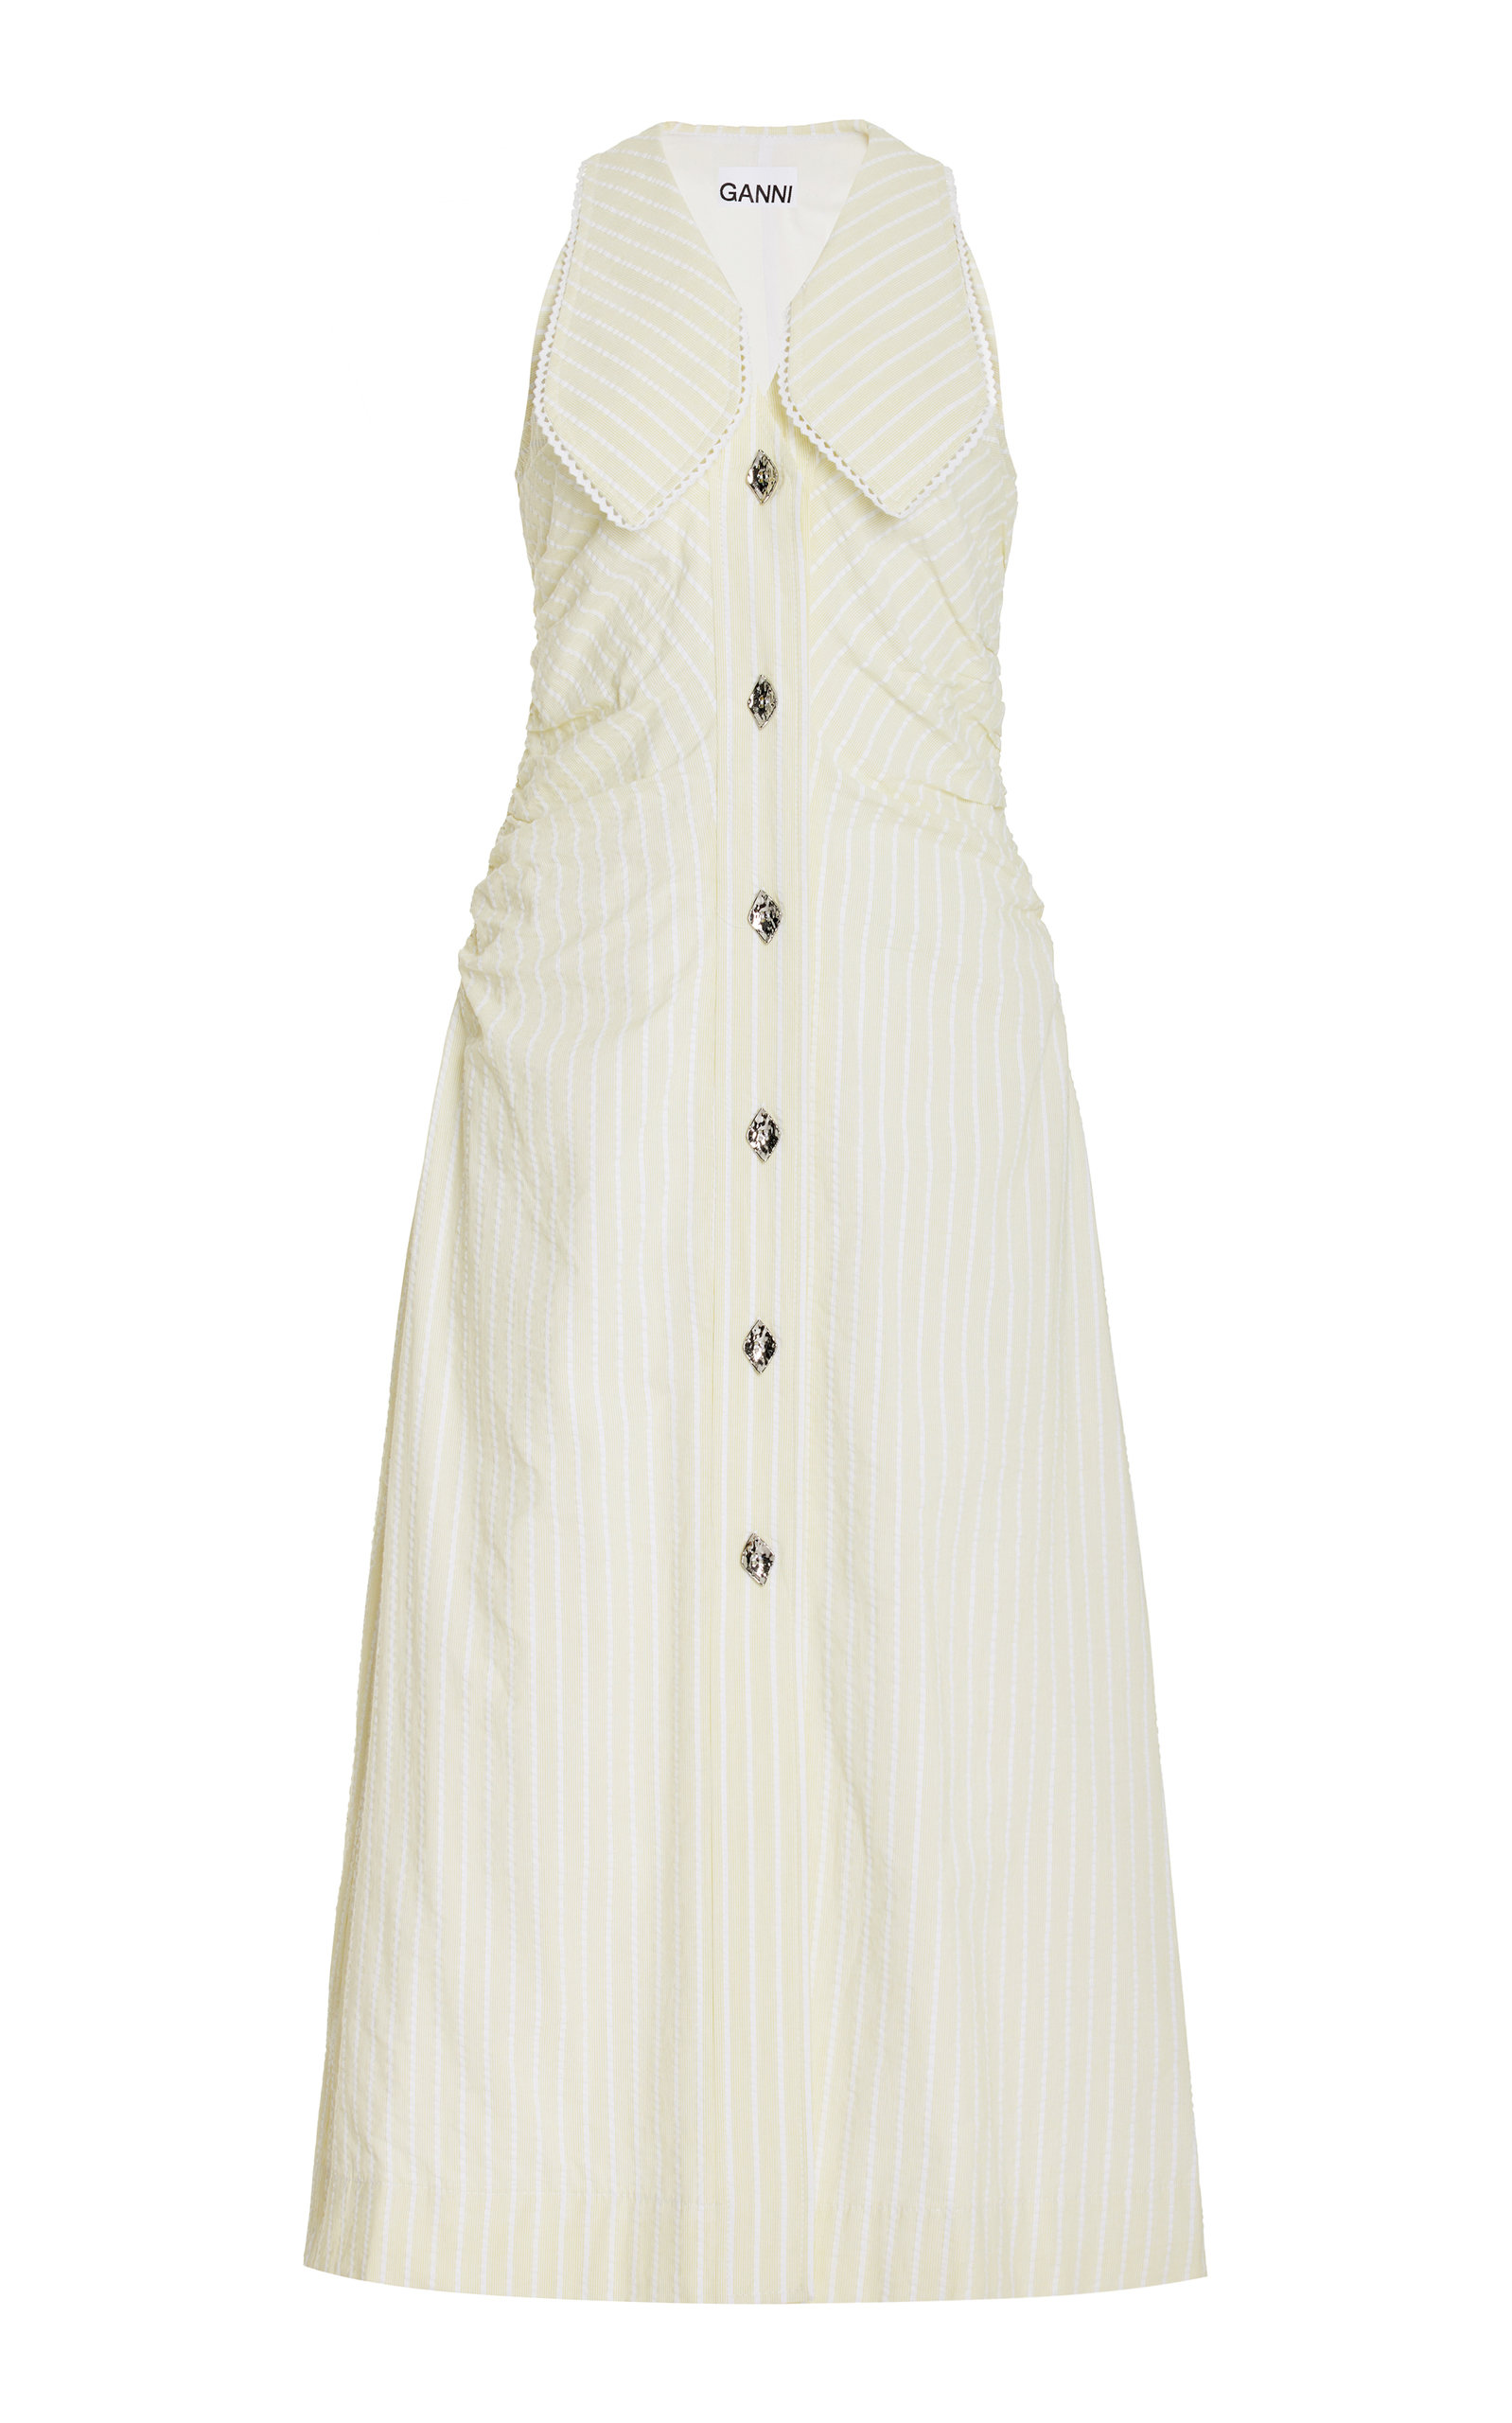 Ganni Women's Striped Seersucker Cotton Midi Dress